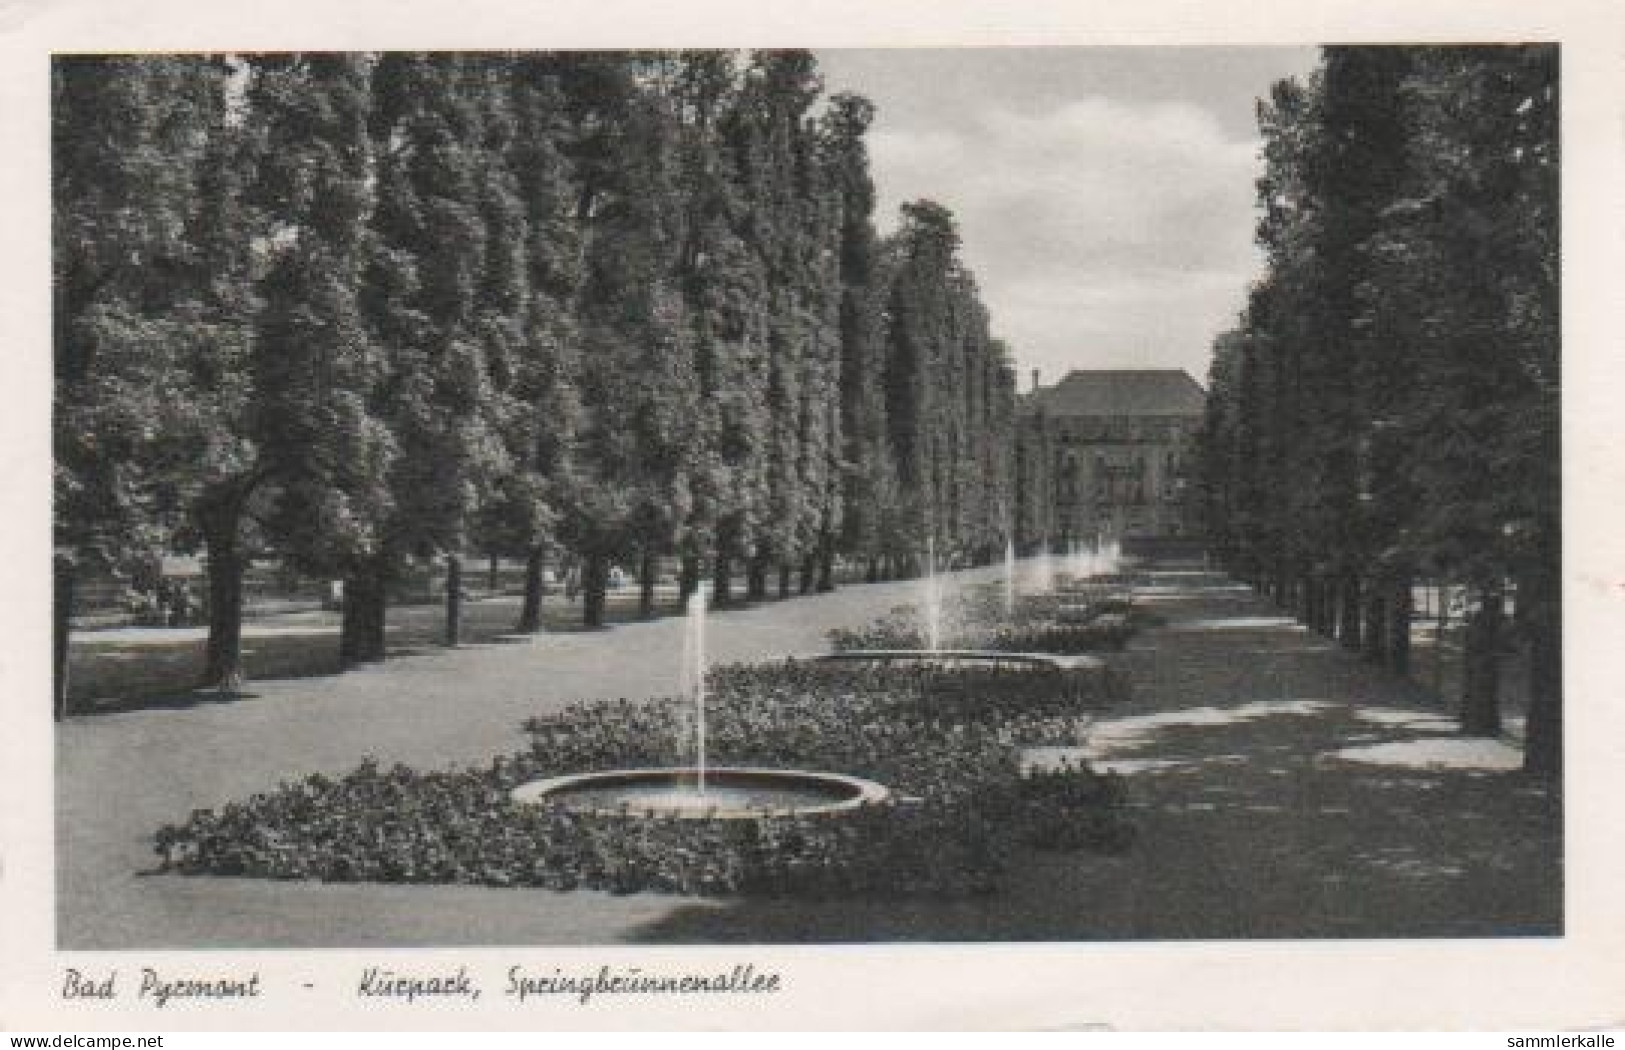 5318 - Bad Pyrmont - Kurpark, Springbrunnenallee - Ca. 1955 - Bad Pyrmont